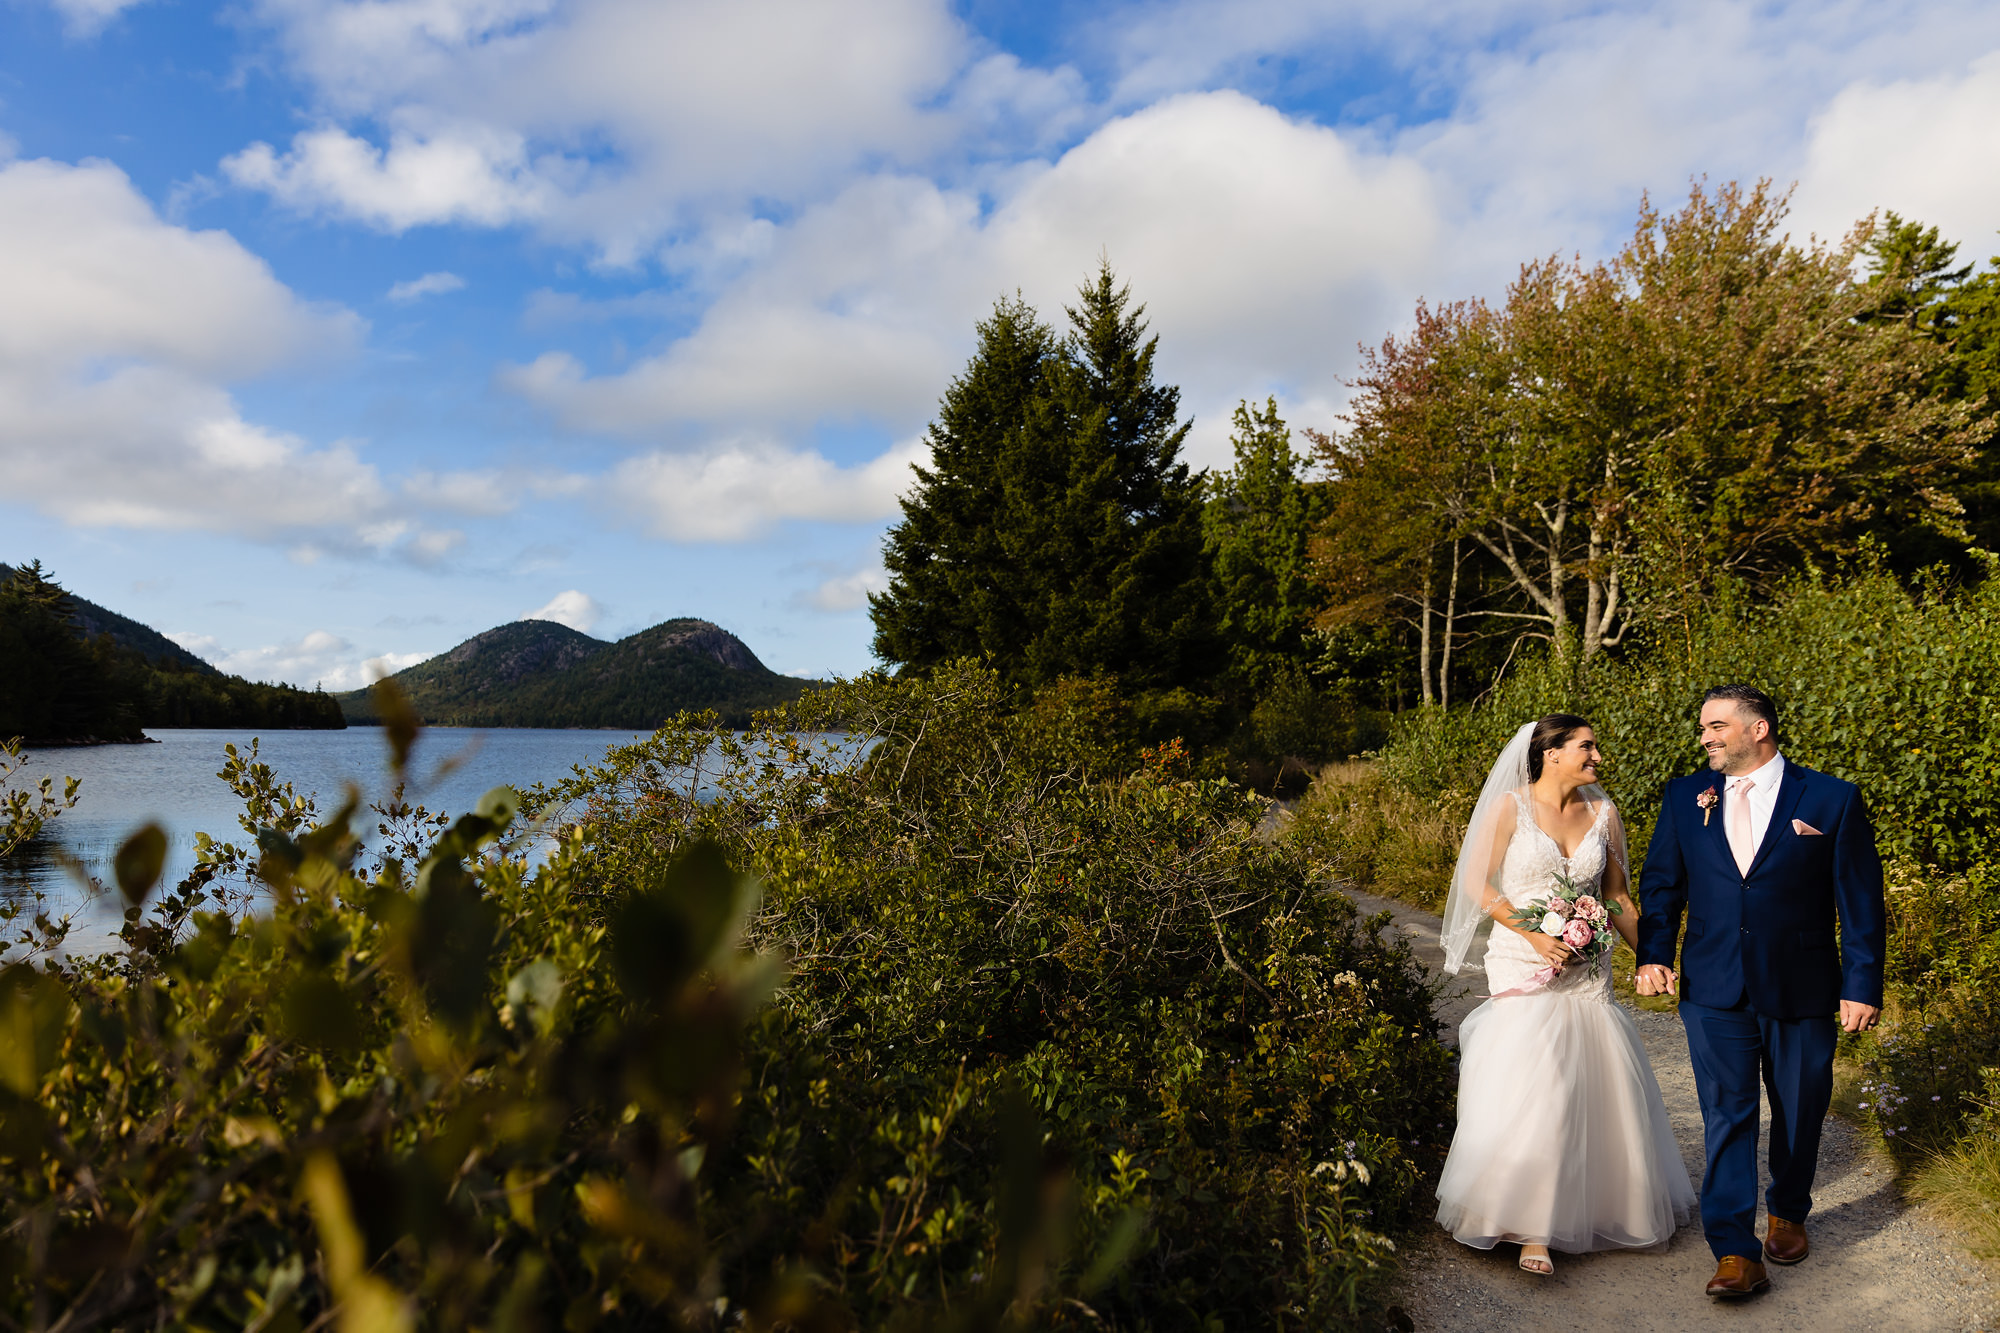 Creative wedding portraits in Acadia National Park